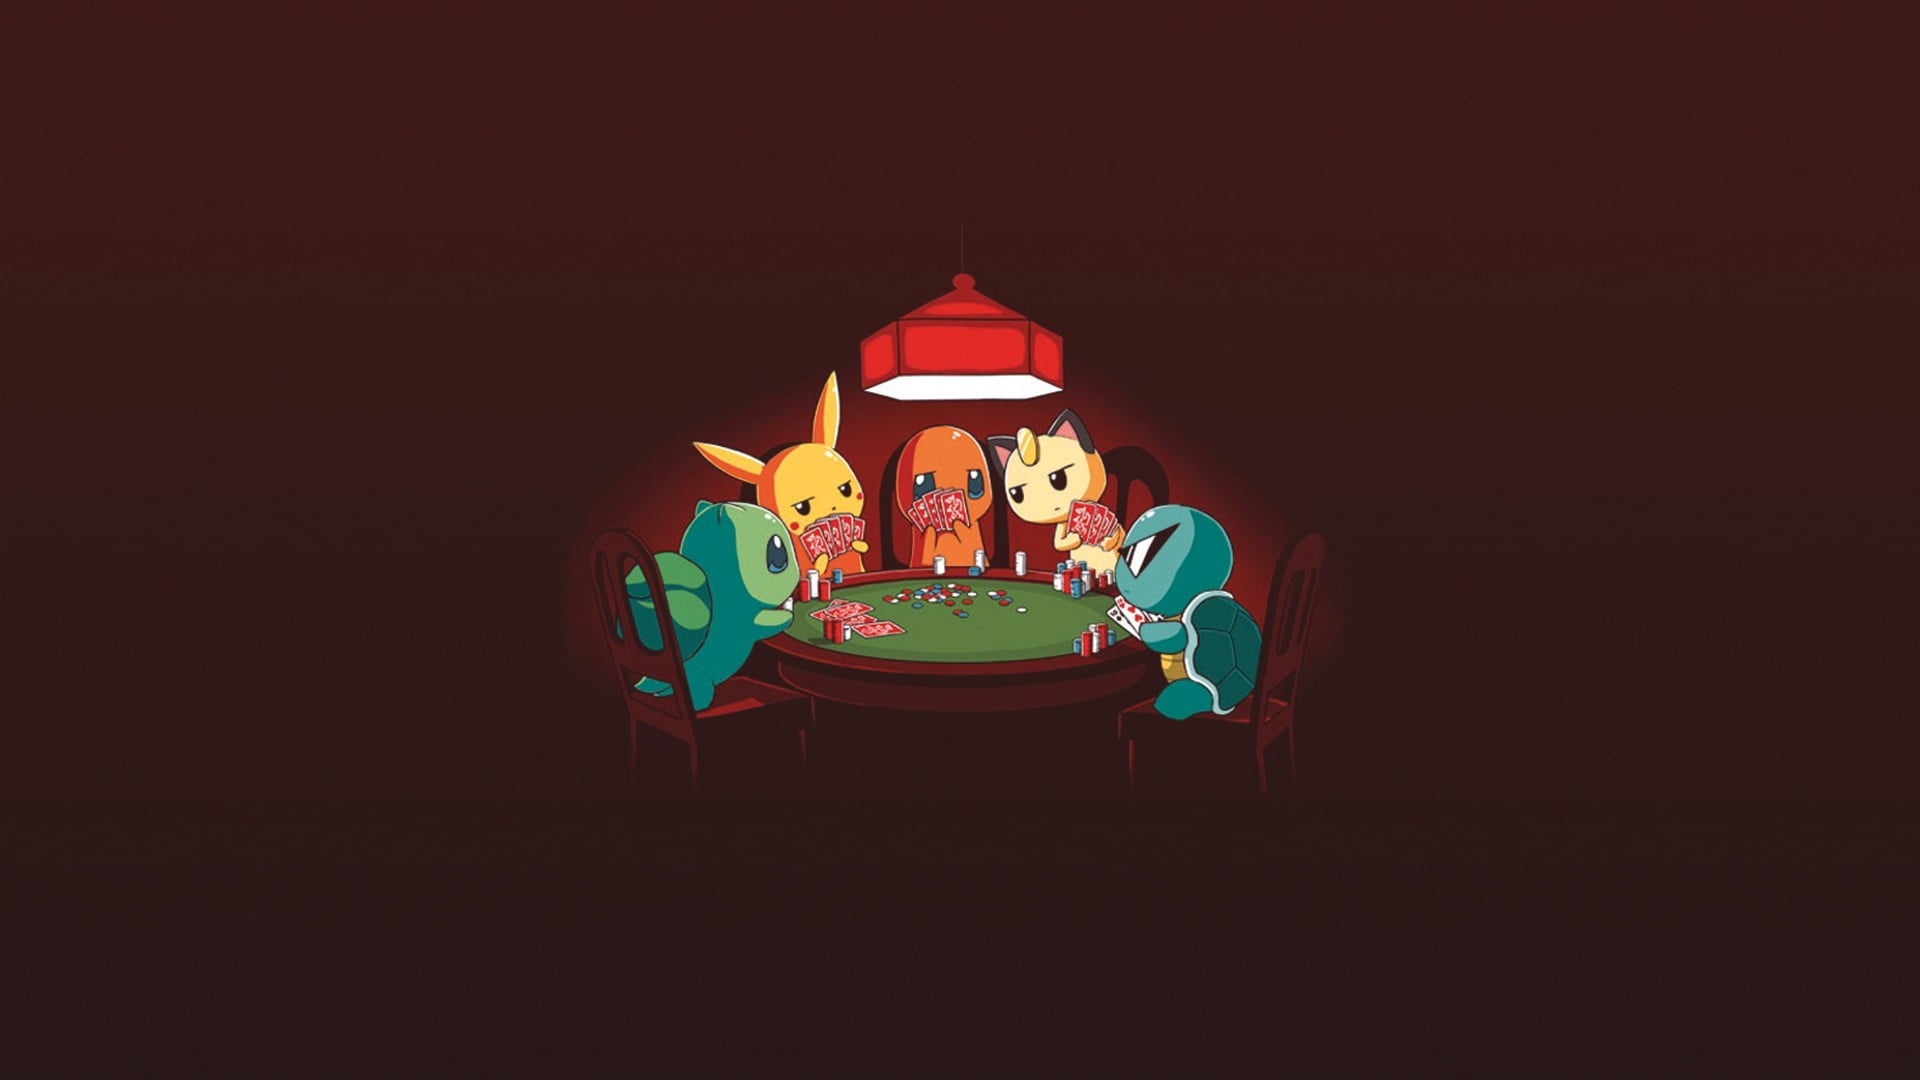 five pokemon characters playing on casino